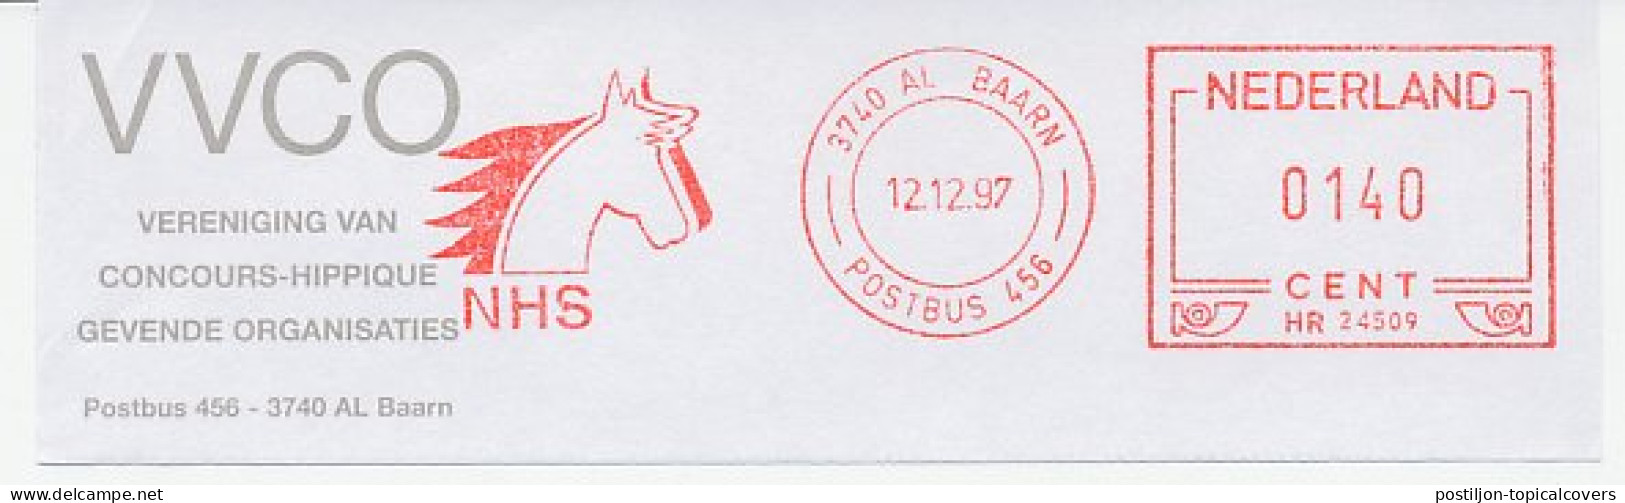 Meter Top Cut Netherlands 1997 Association Concours Hippique - Horse Show - Paardensport